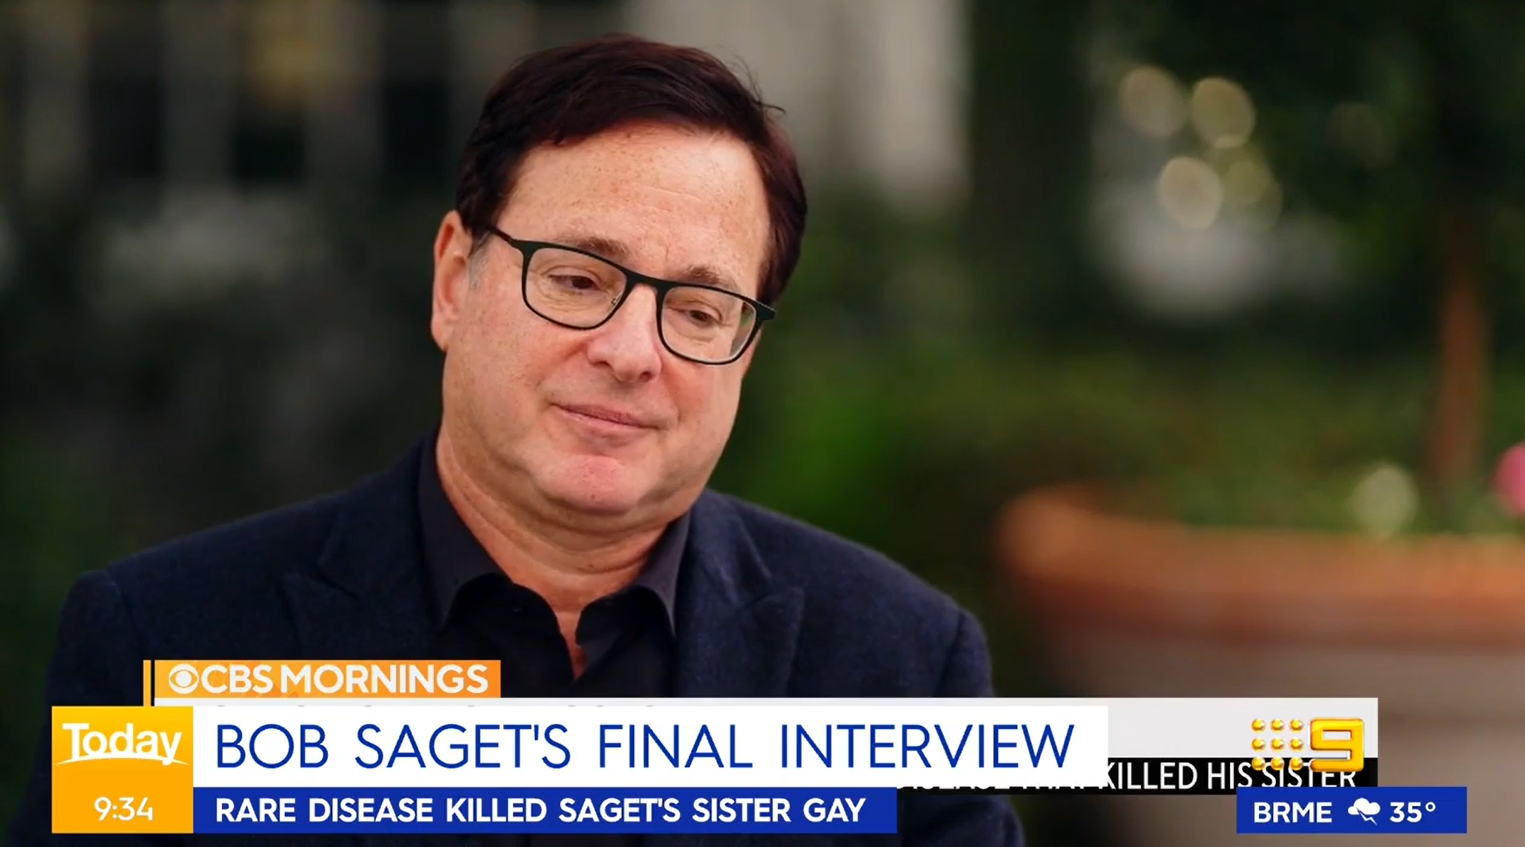 Bob Saget gives emotional admission about sister's death in last ever TV interview.